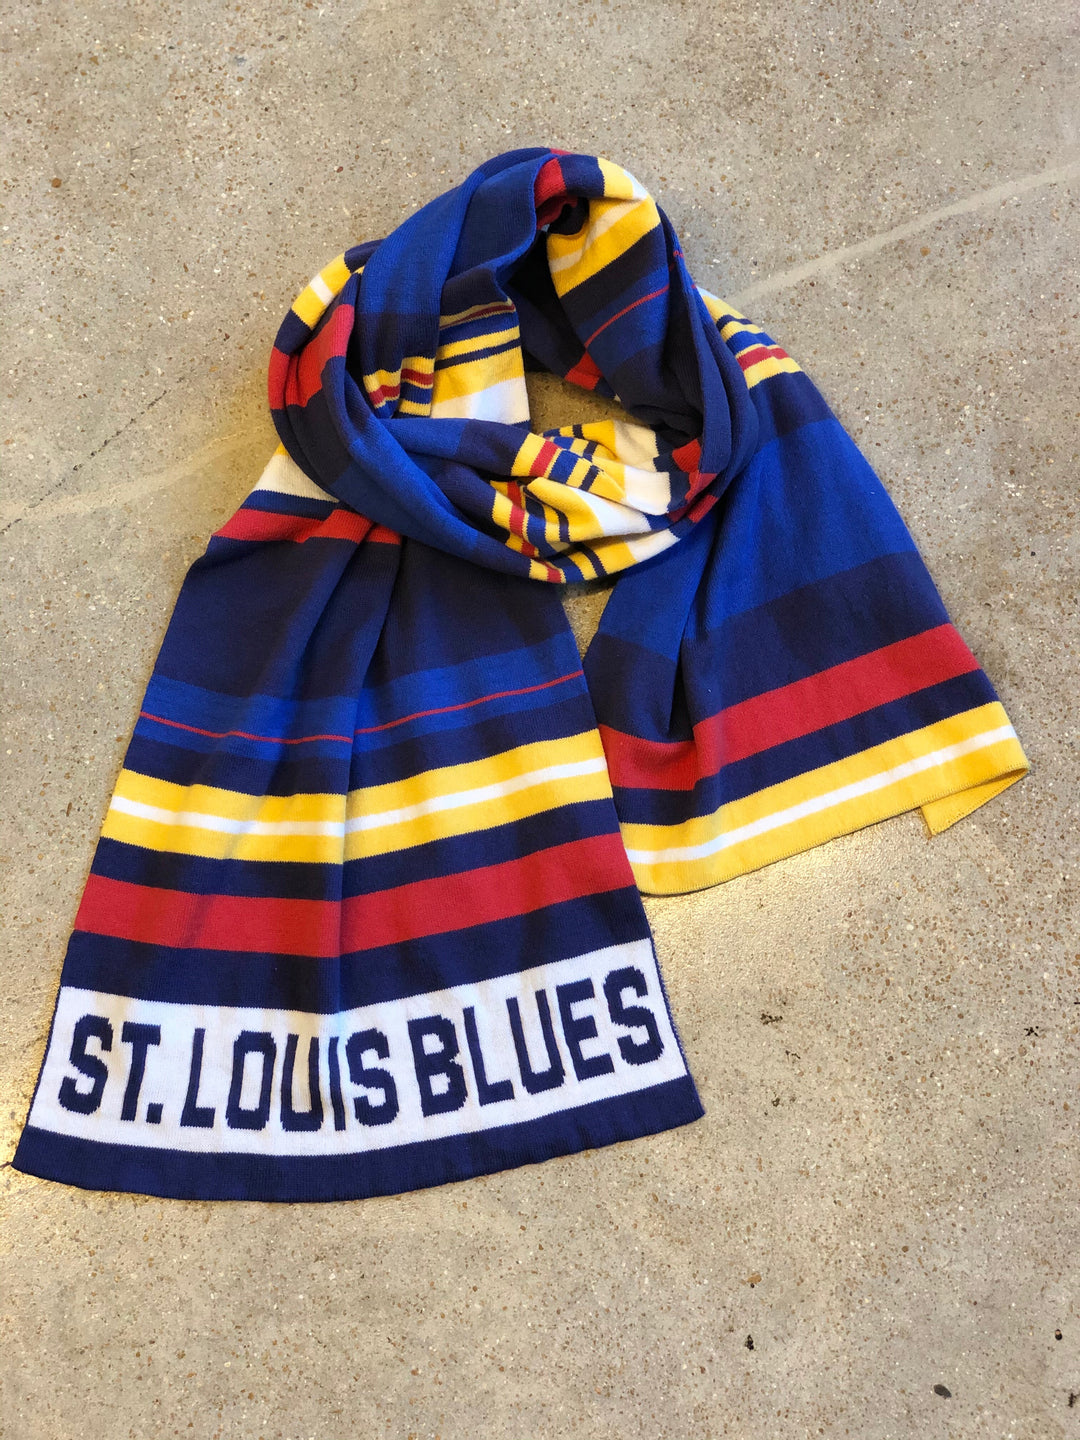 St. Louis Blues x Emily Stahl x Lusso Merch Collection